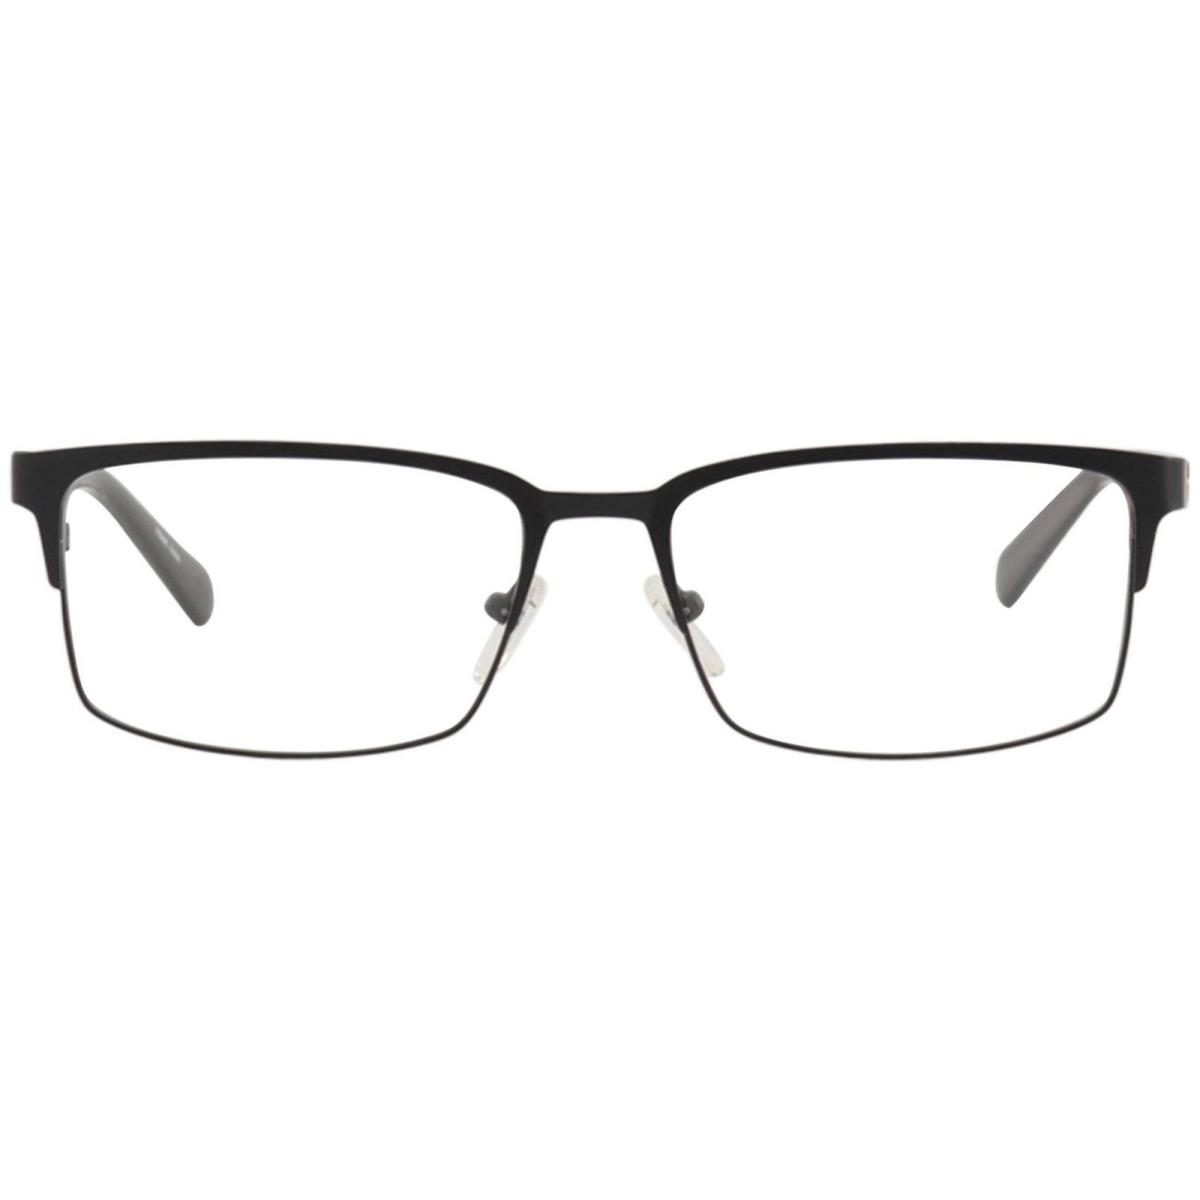 Dragon Ben Eyeglasses DR139 DR/139 016 Satin Black Full Rim Optical Frame 53mm